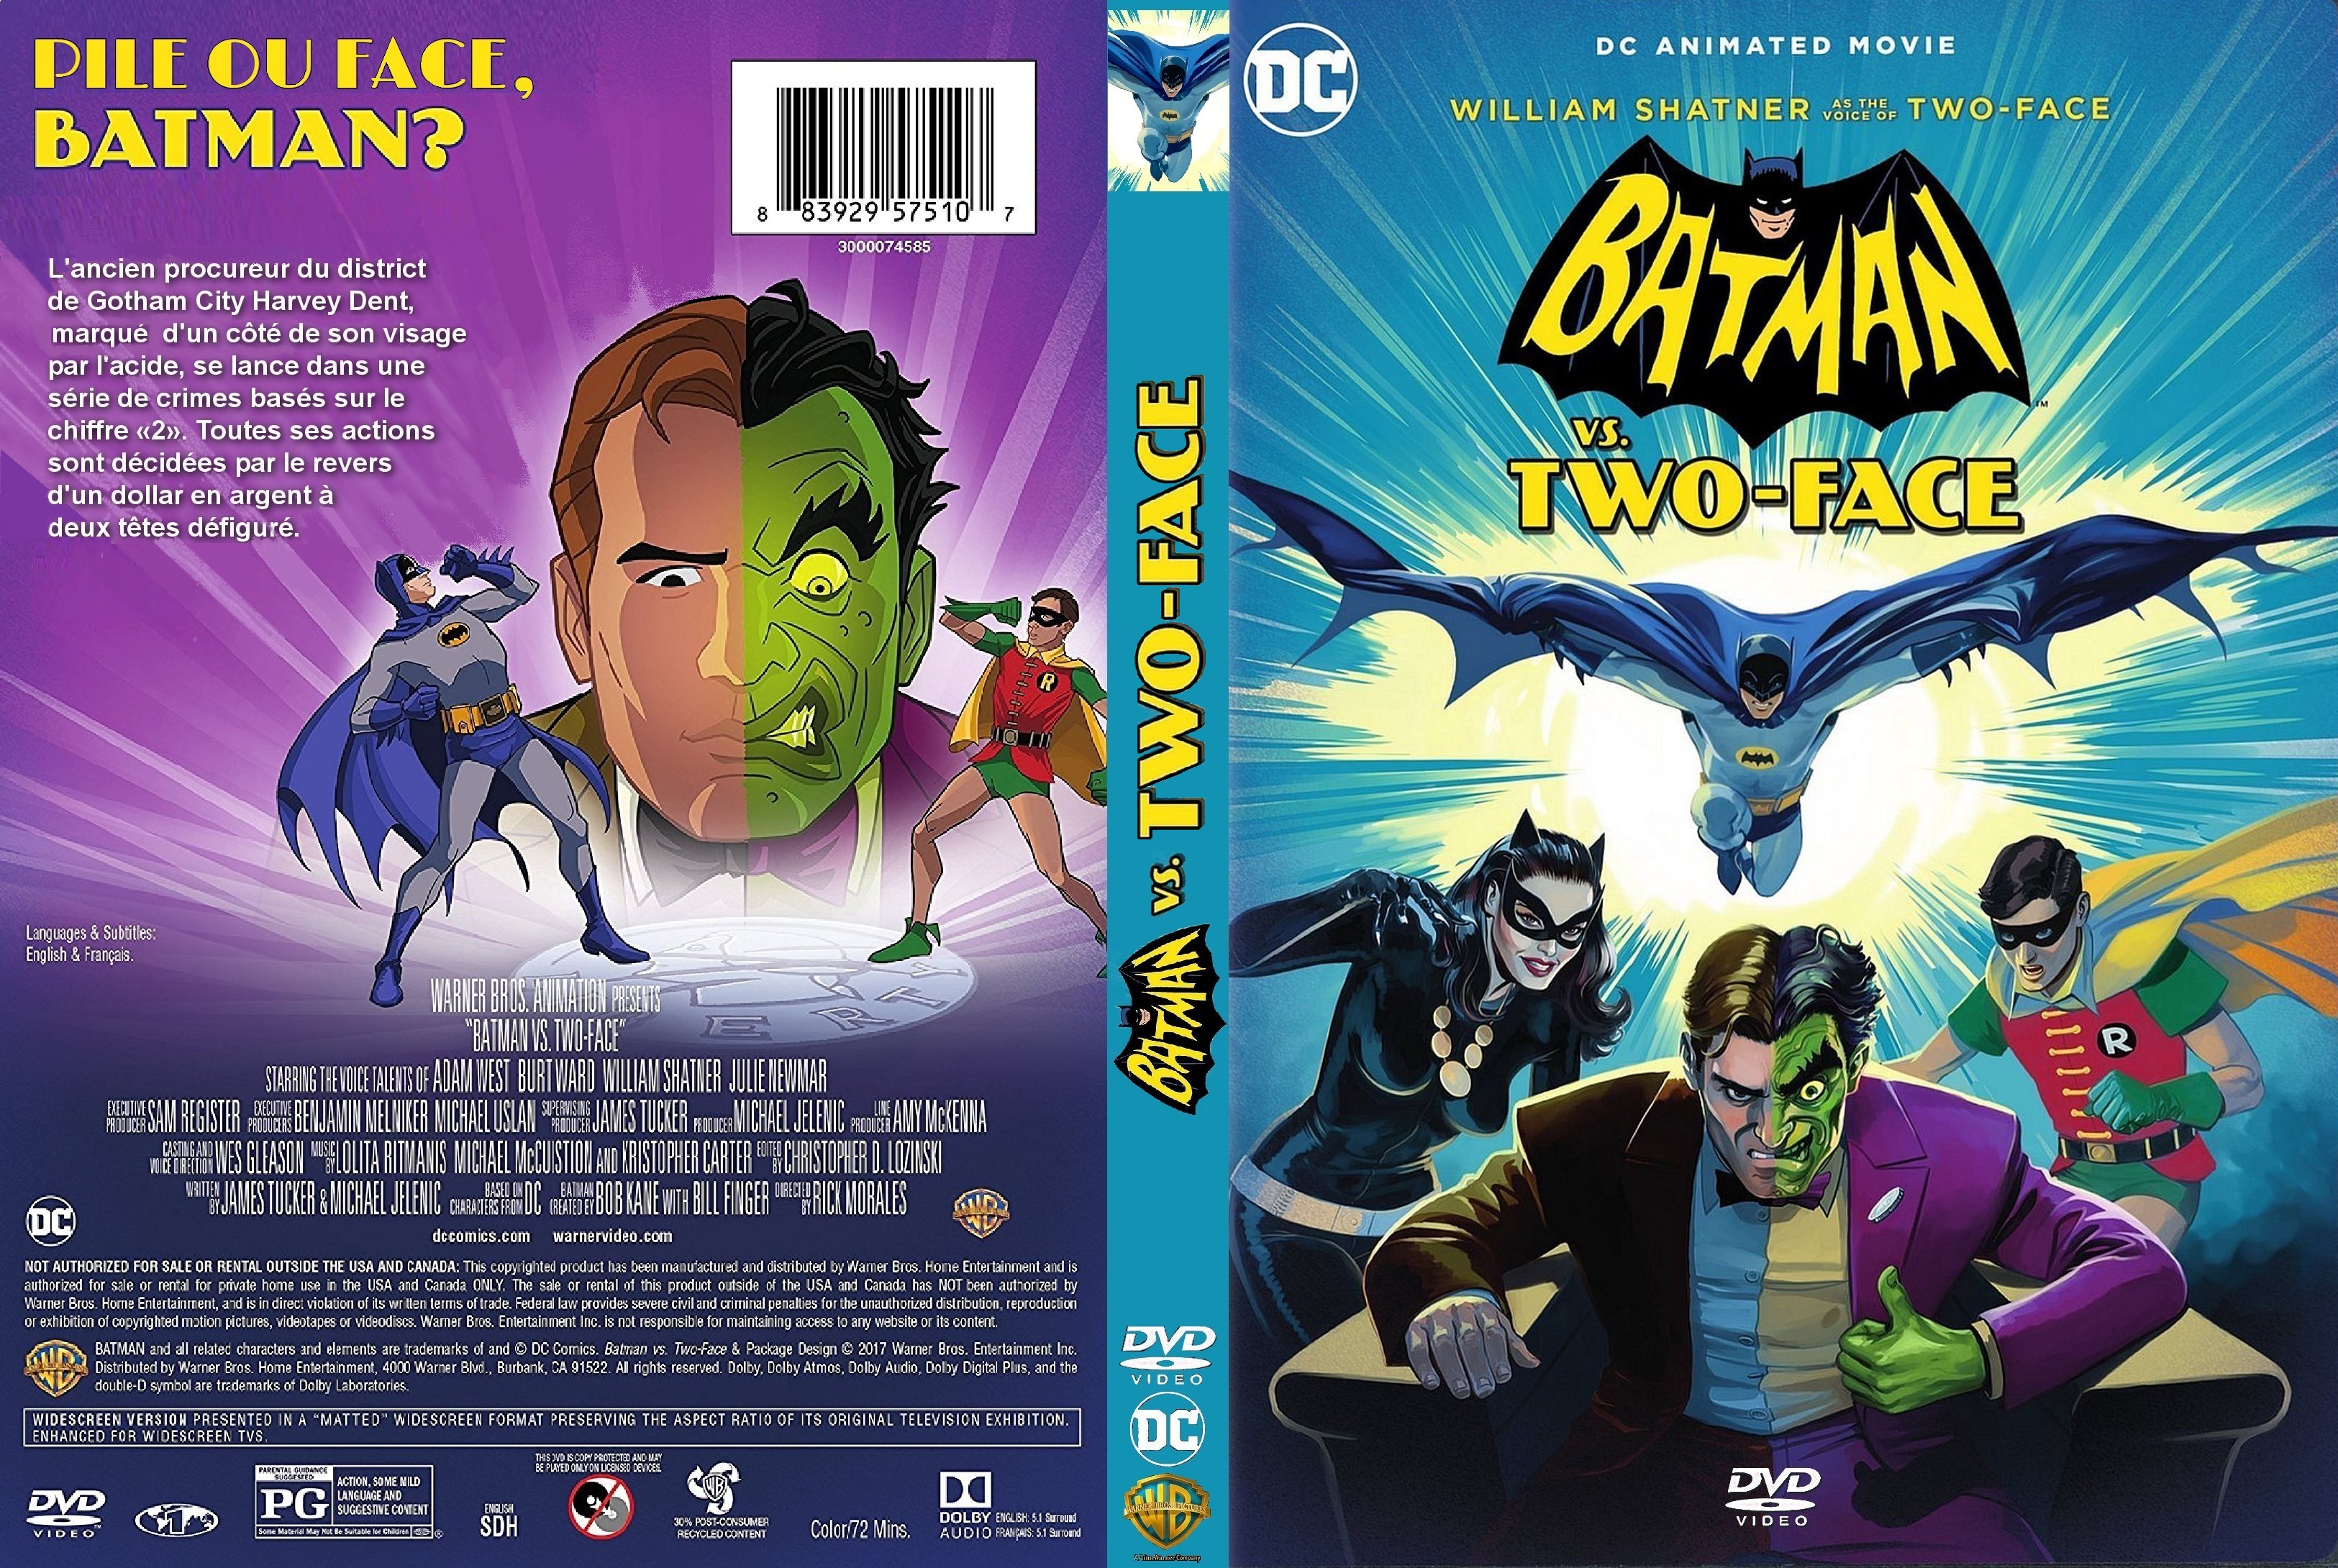 Jaquette DVD Batman vs Two-Face custom